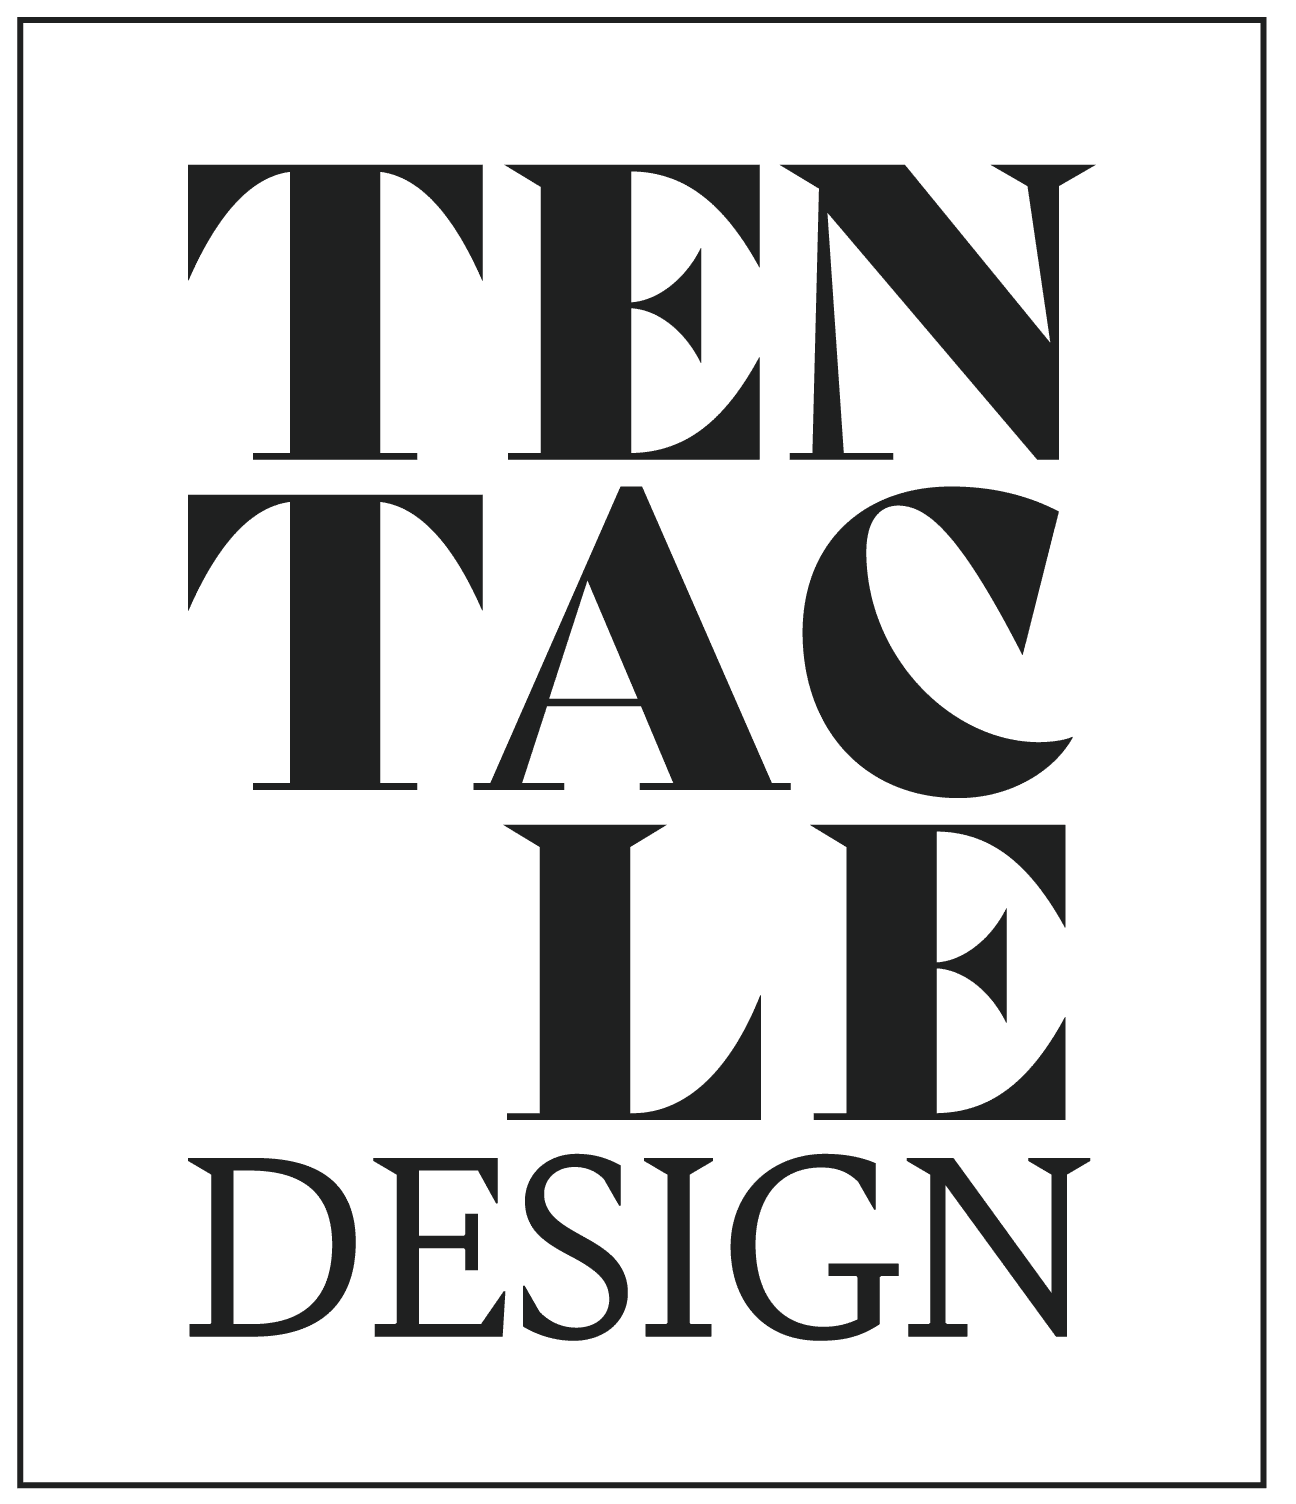 TENTACLE DESIGN